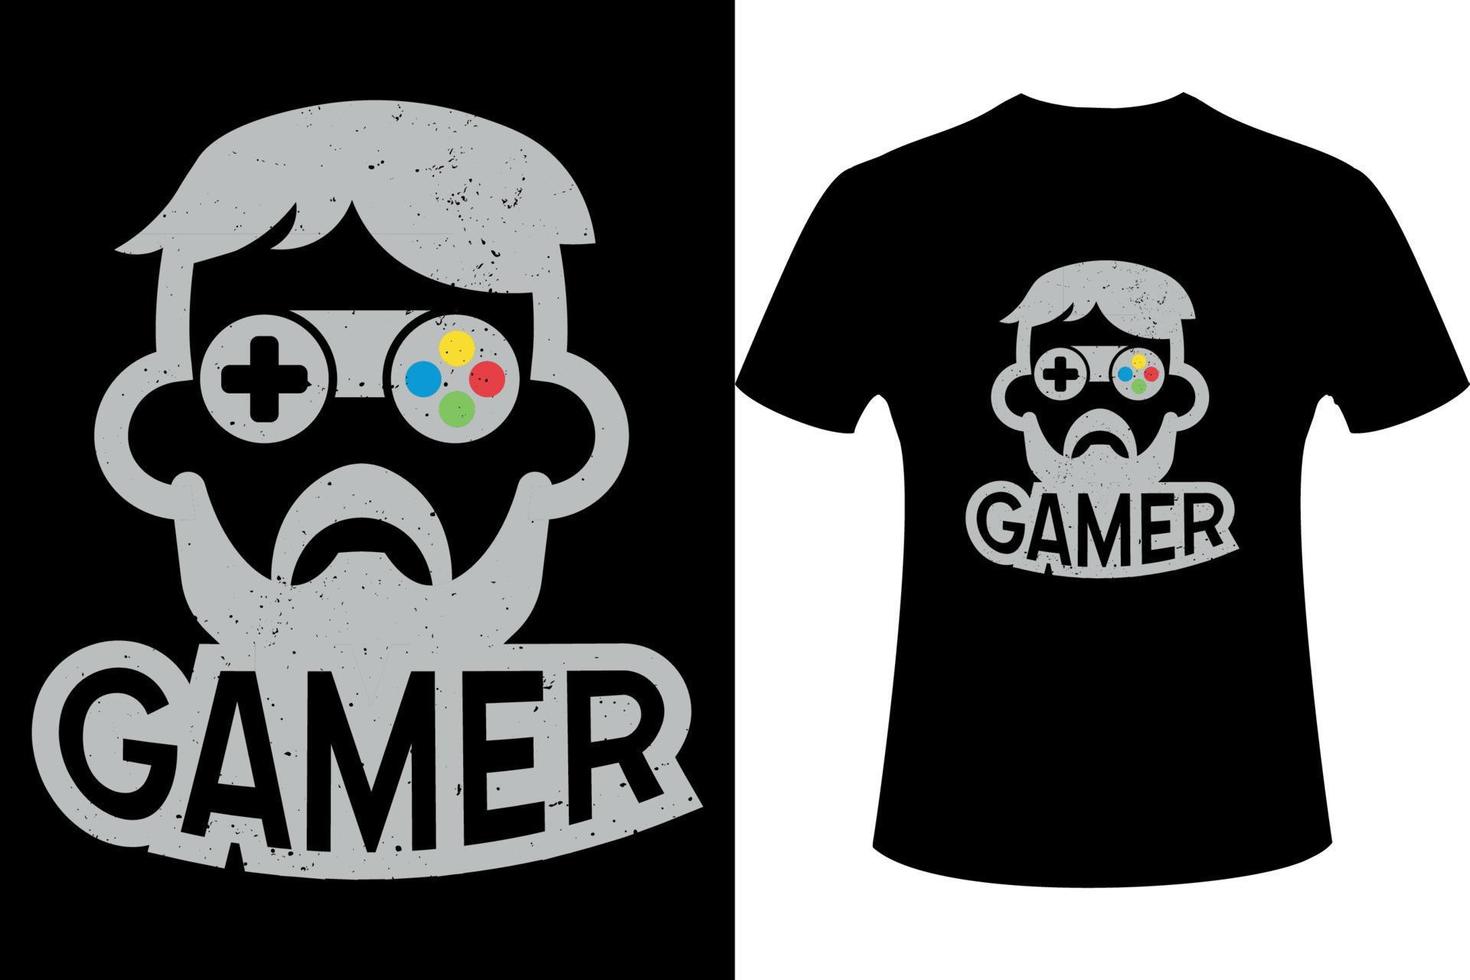 Gamer slogan vector T-shirt design for kids  Gaming t-shirt design.